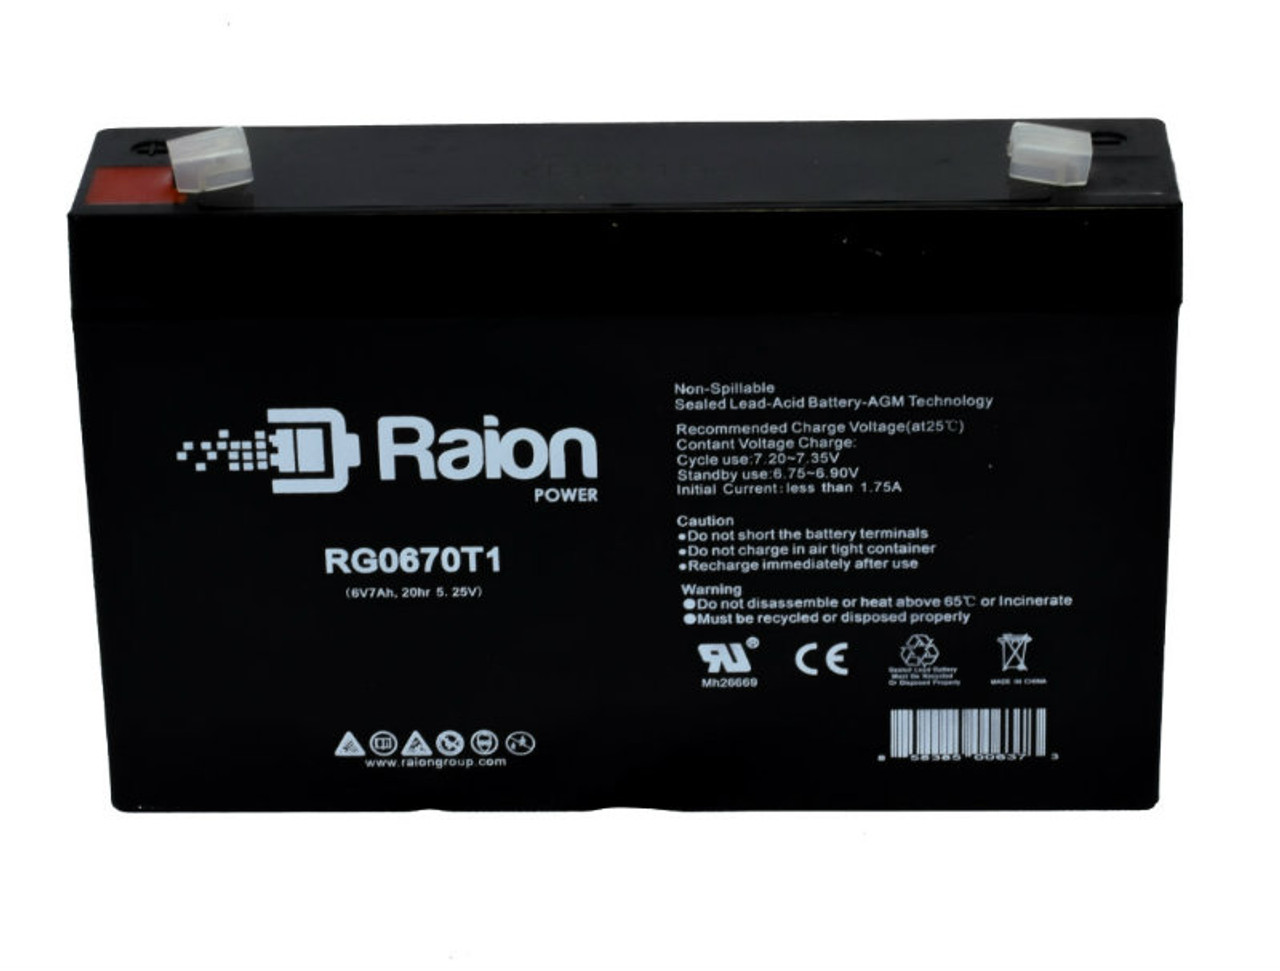 Raion Power RG0670T1 SLA Battery for FIAMM FG10721 OEM Battery